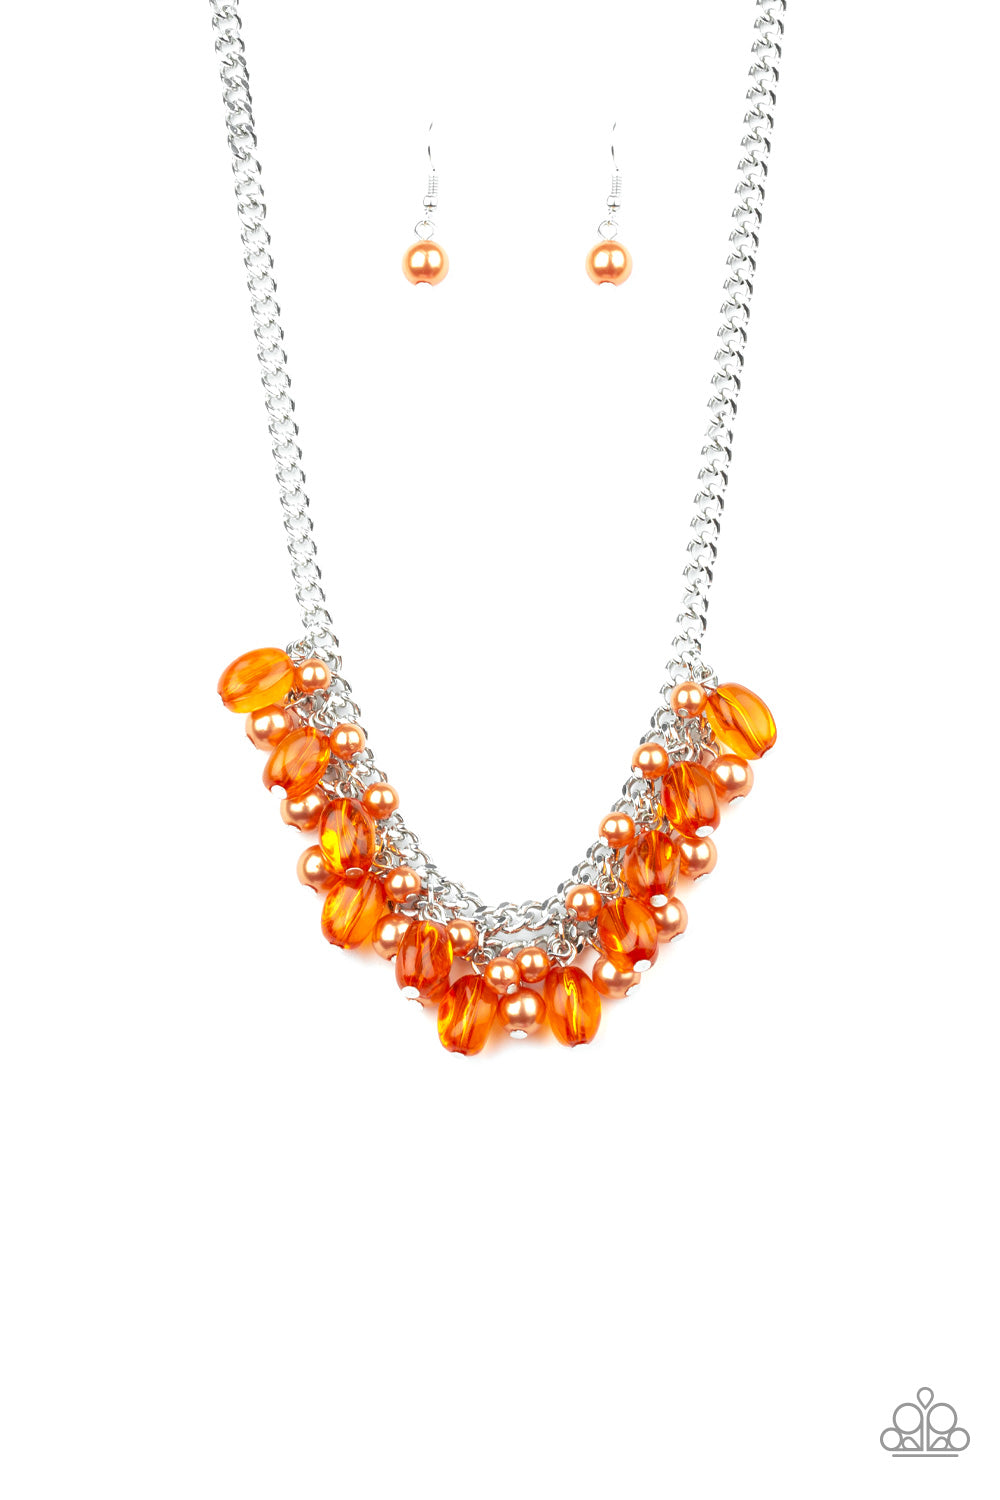 5th Avenue Flirtation Orange Paparazzi Necklaces Cashmere Pink Jewels - Cashmere Pink Jewels & Accessories, Cashmere Pink Jewels & Accessories - Paparazzi